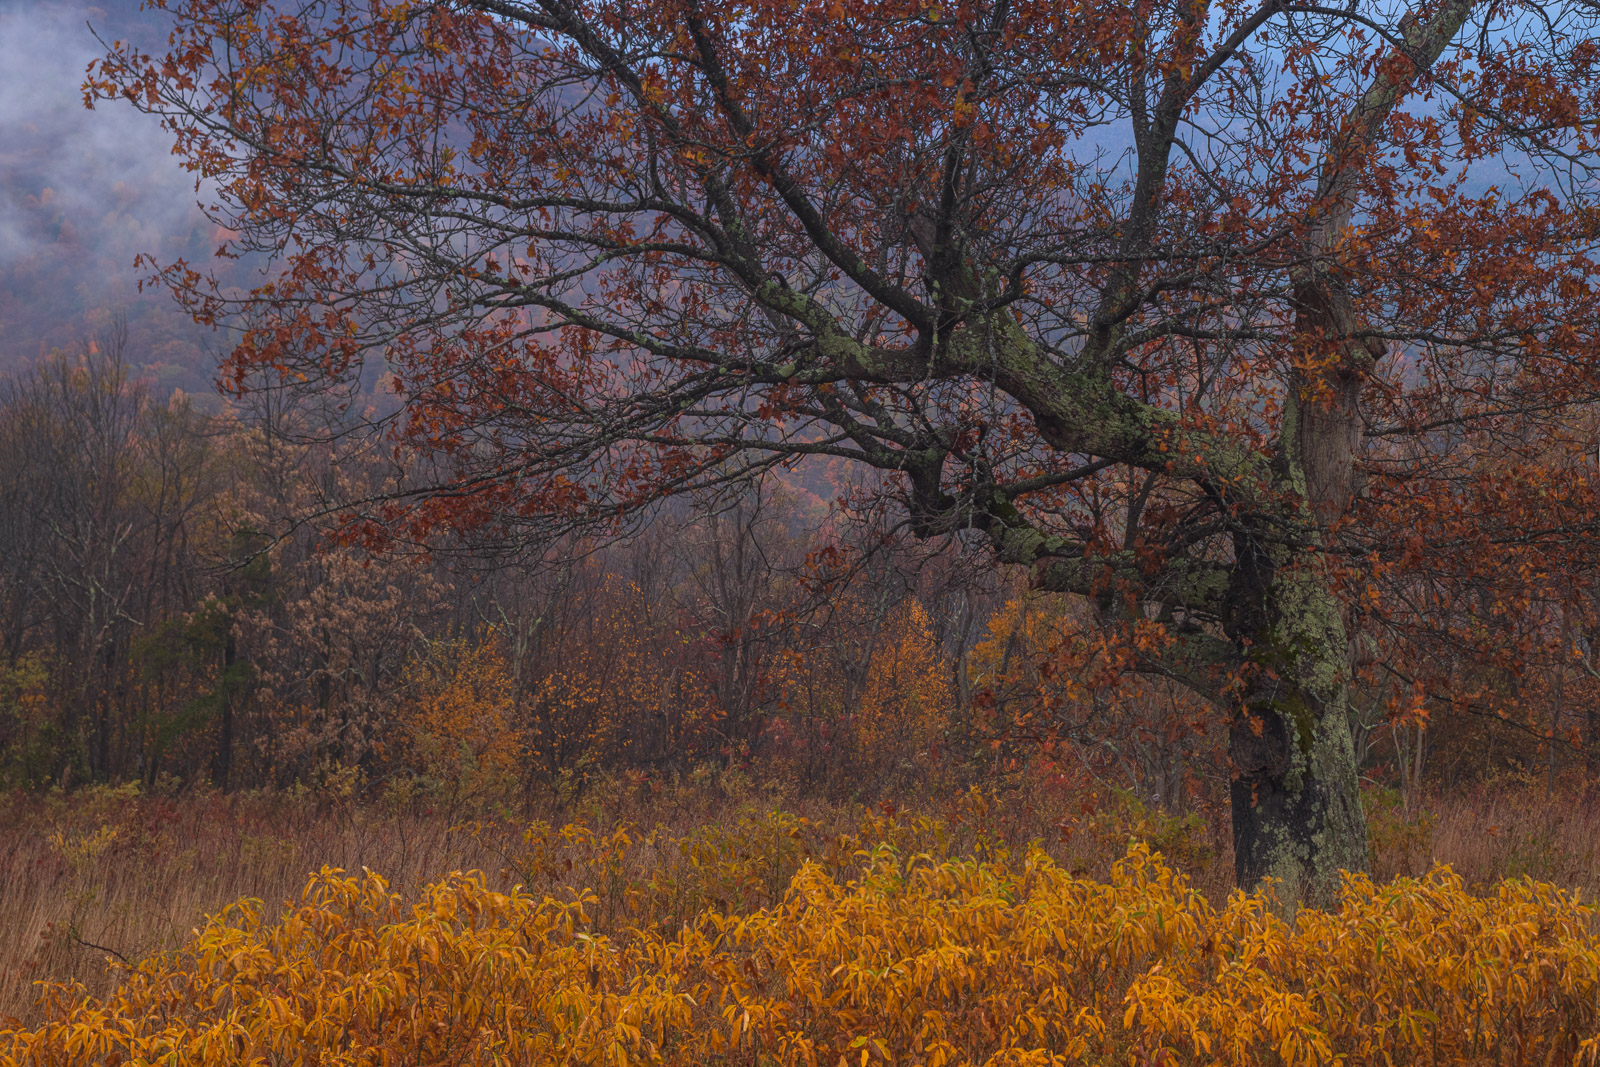 Autumn Oak Tree and ferns on Skyline Drive, Shenandoah National Park.